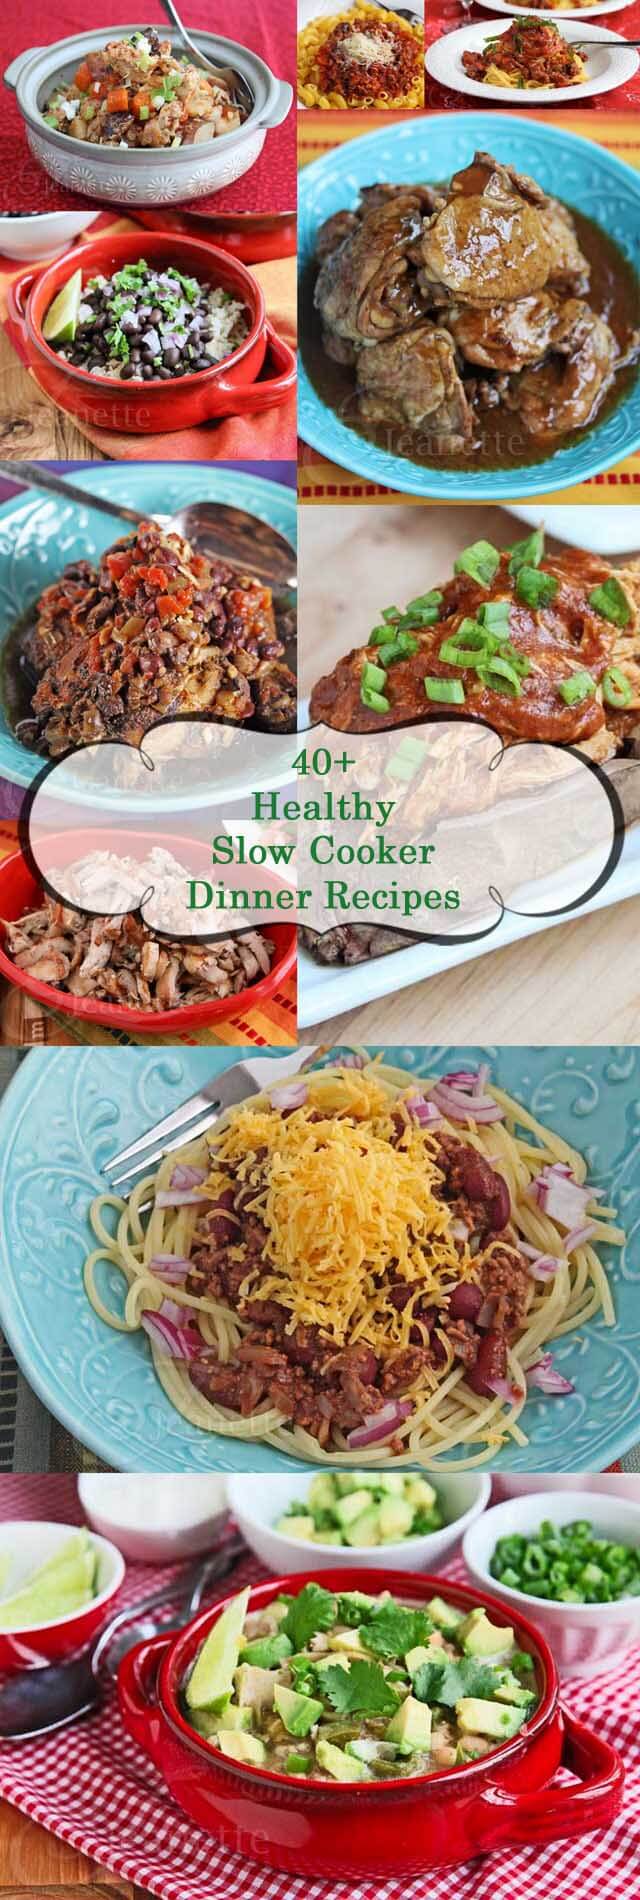 40+ Slow Cooker Dinner Recipes